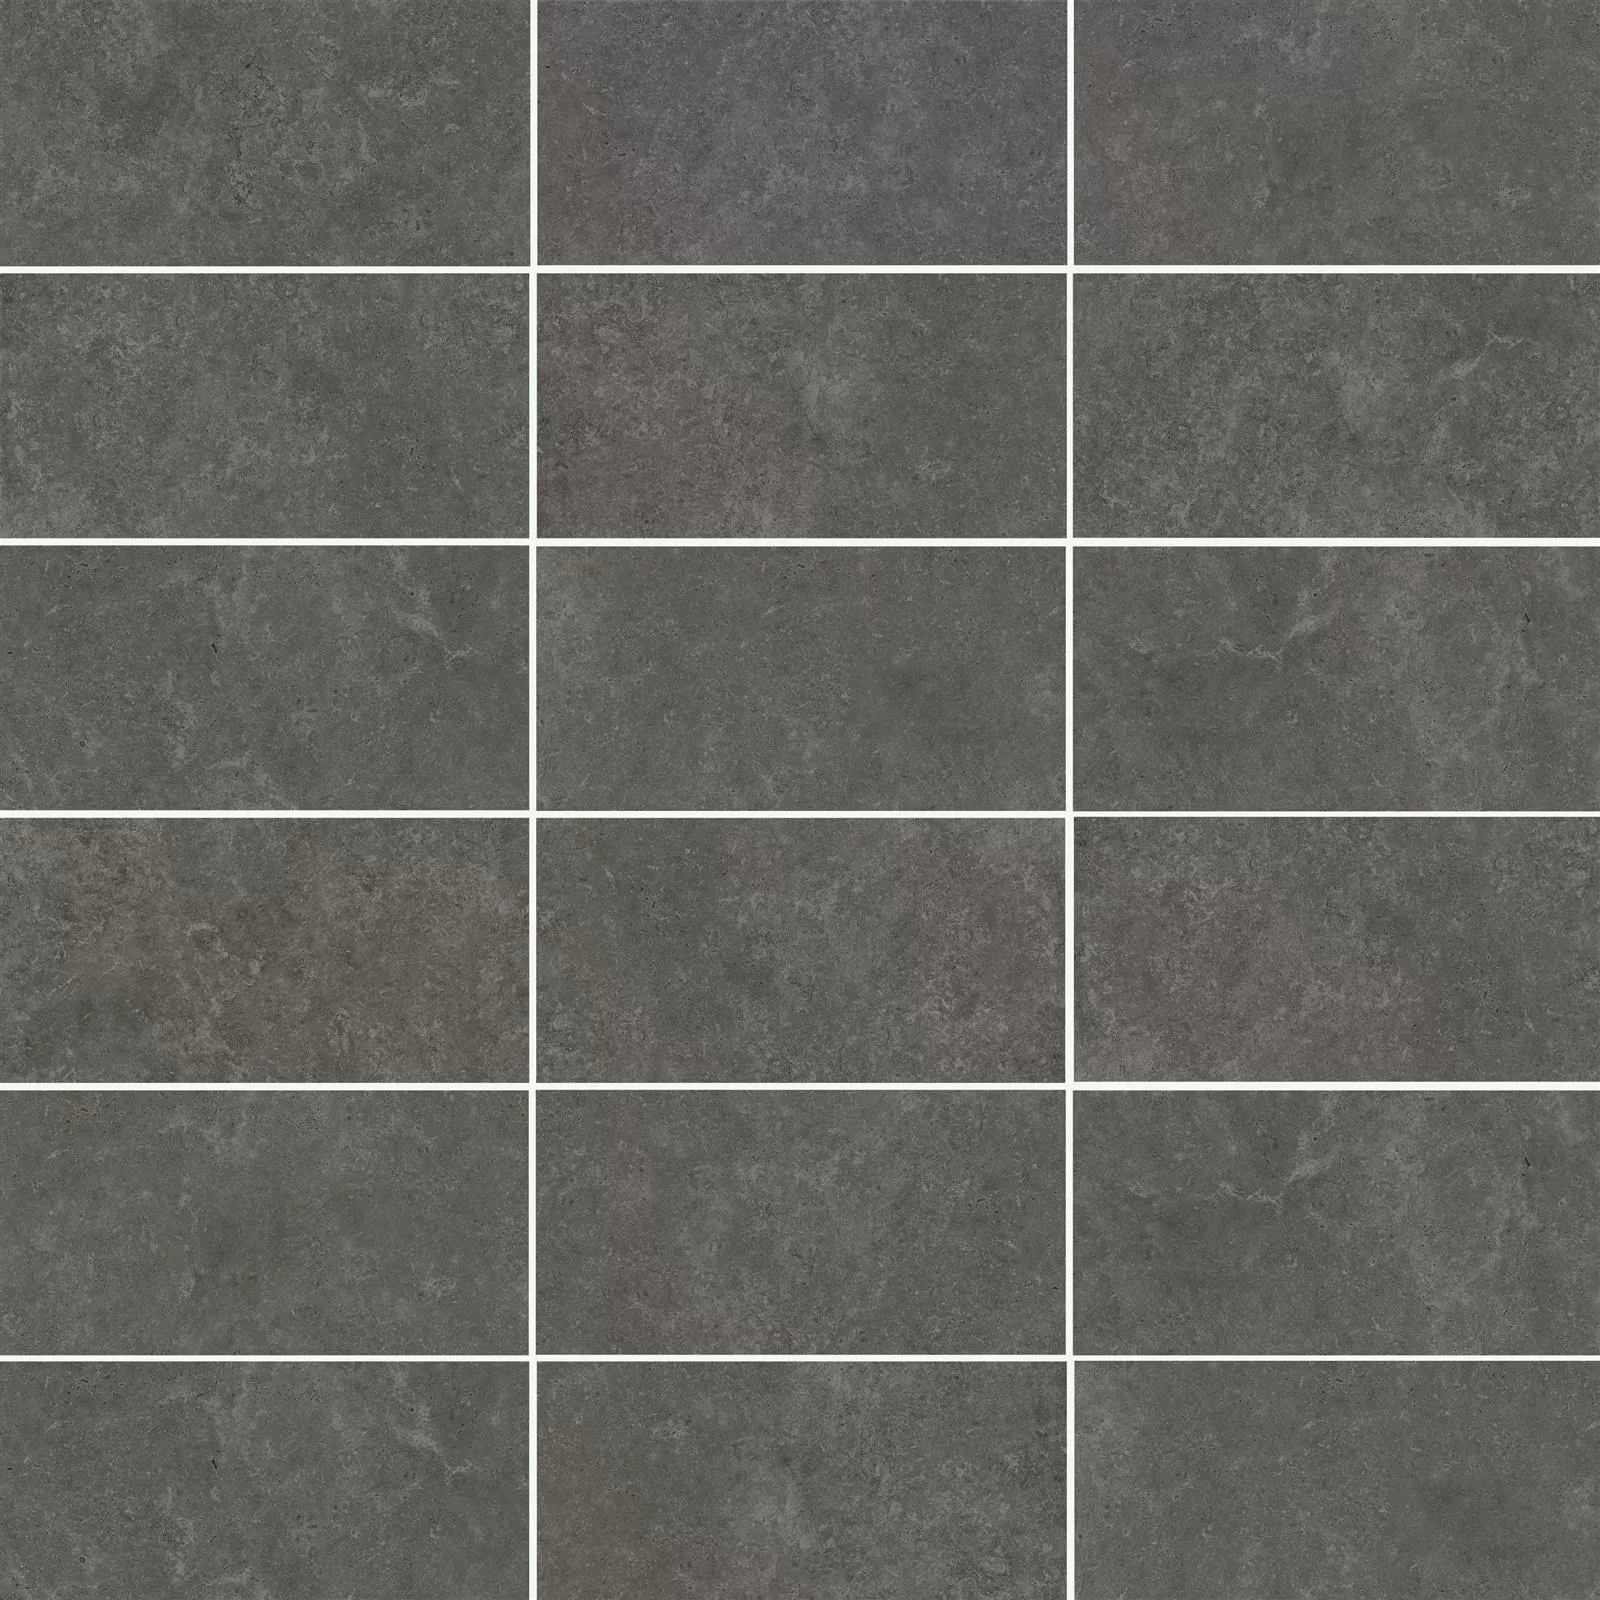 Sample Terrace Tiles Corroy Anthracite 45x90x2cm